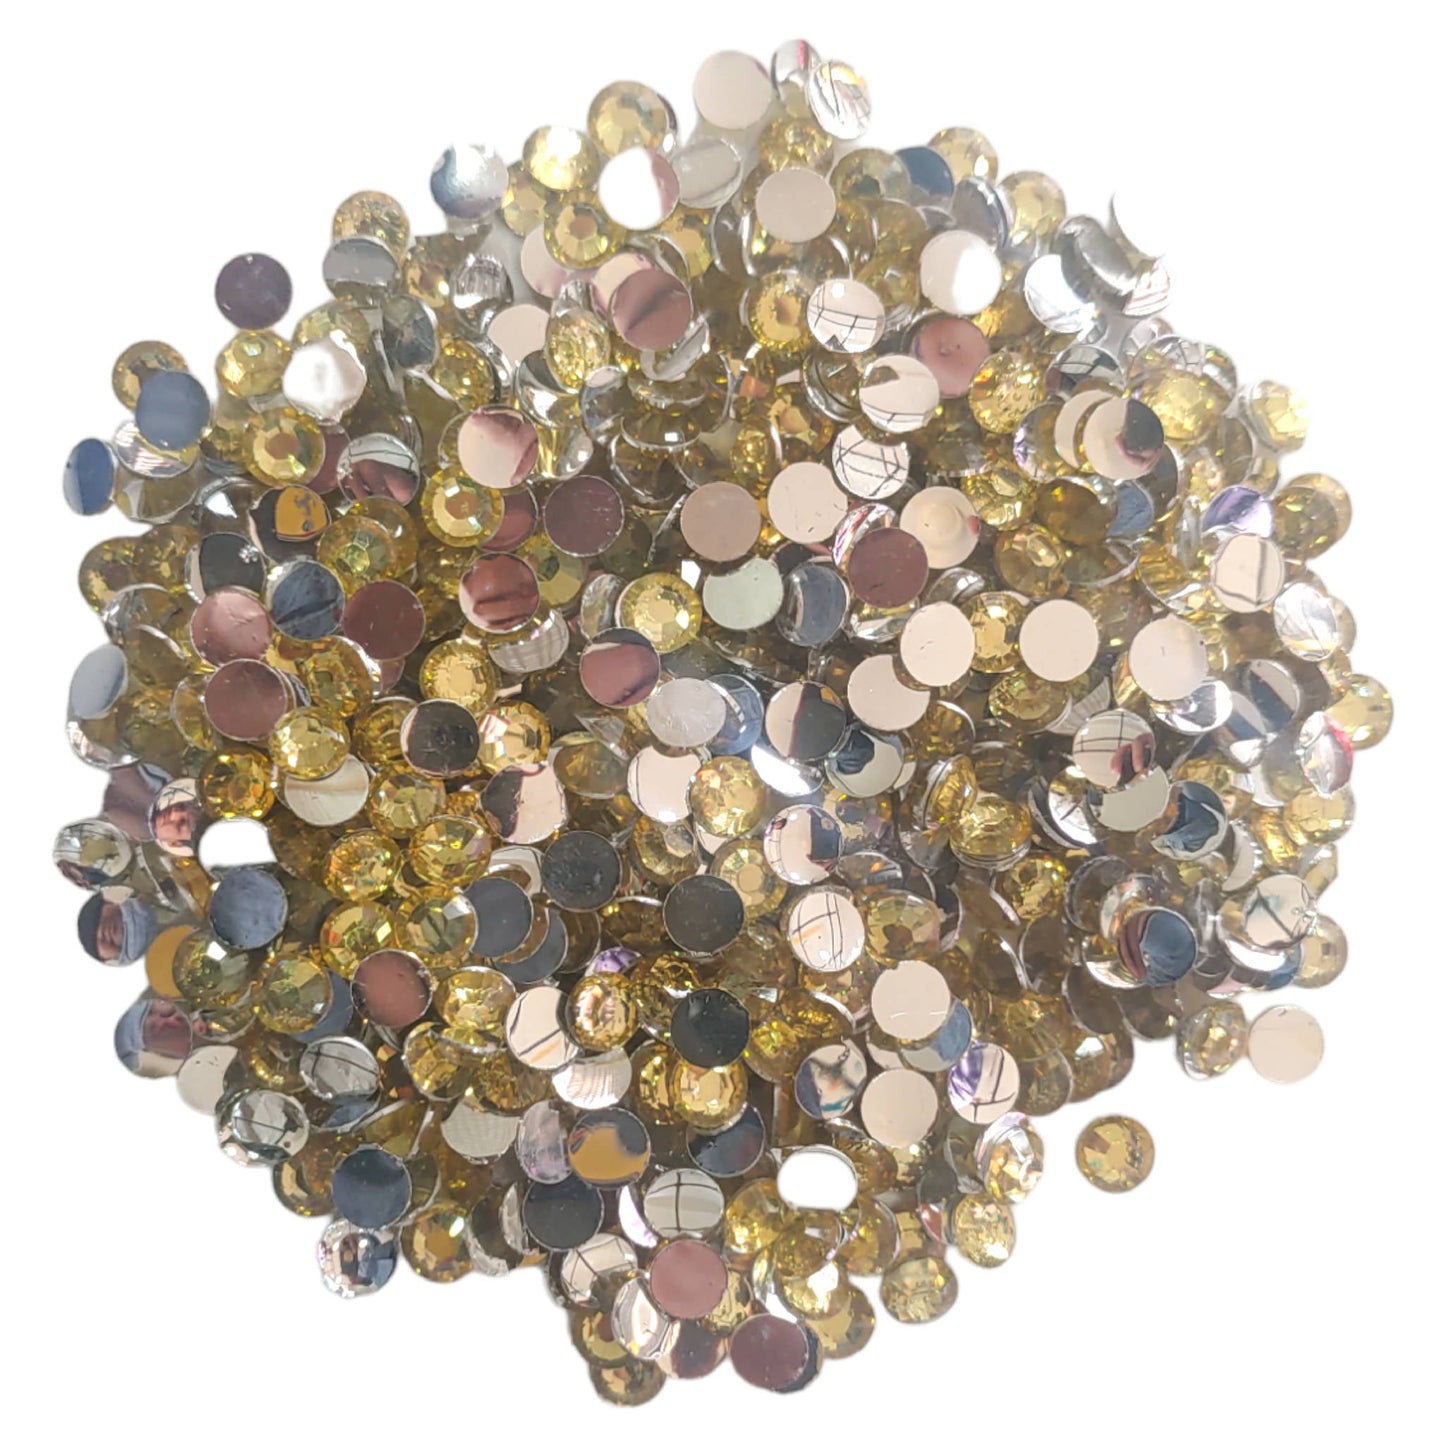 Crystal Shine Glass Round Cut Dana Stone-Beads For Craft Or Decor